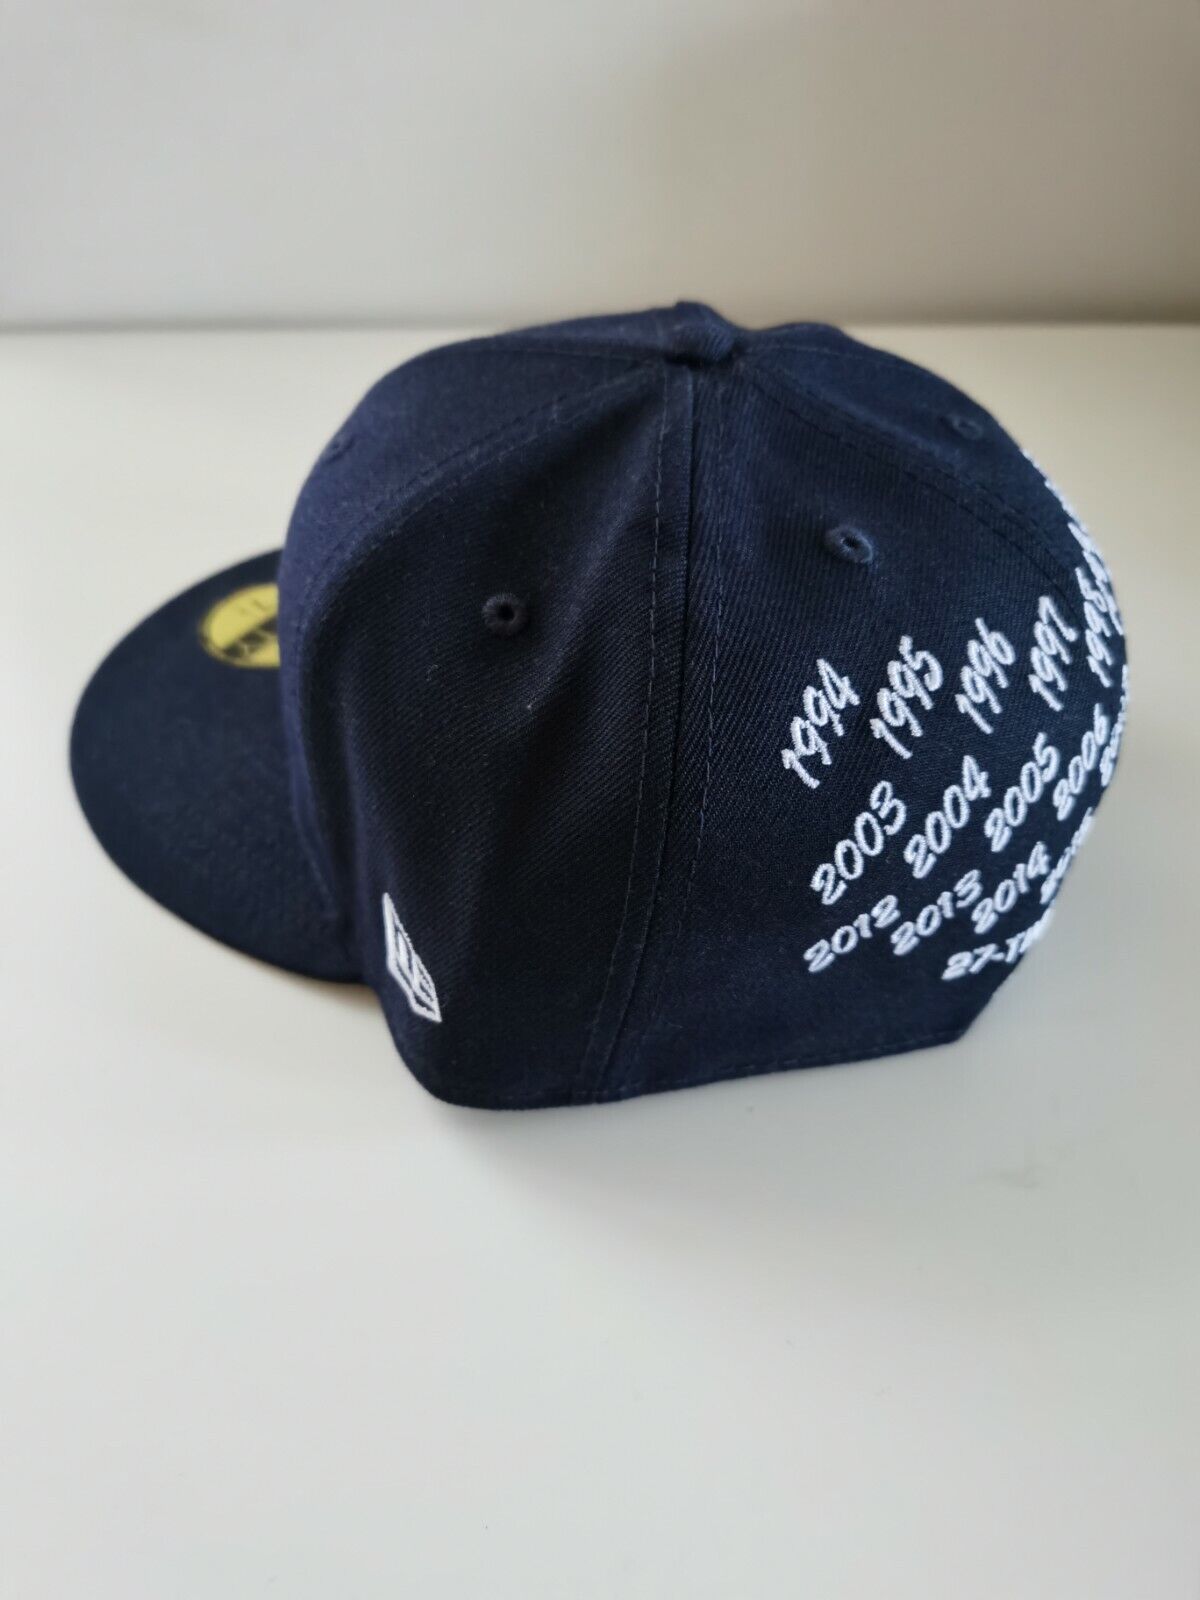 Supreme Champions Box Logo New Era Hat Cap Size 7 1/4 + 7 3/8 SS21 2021